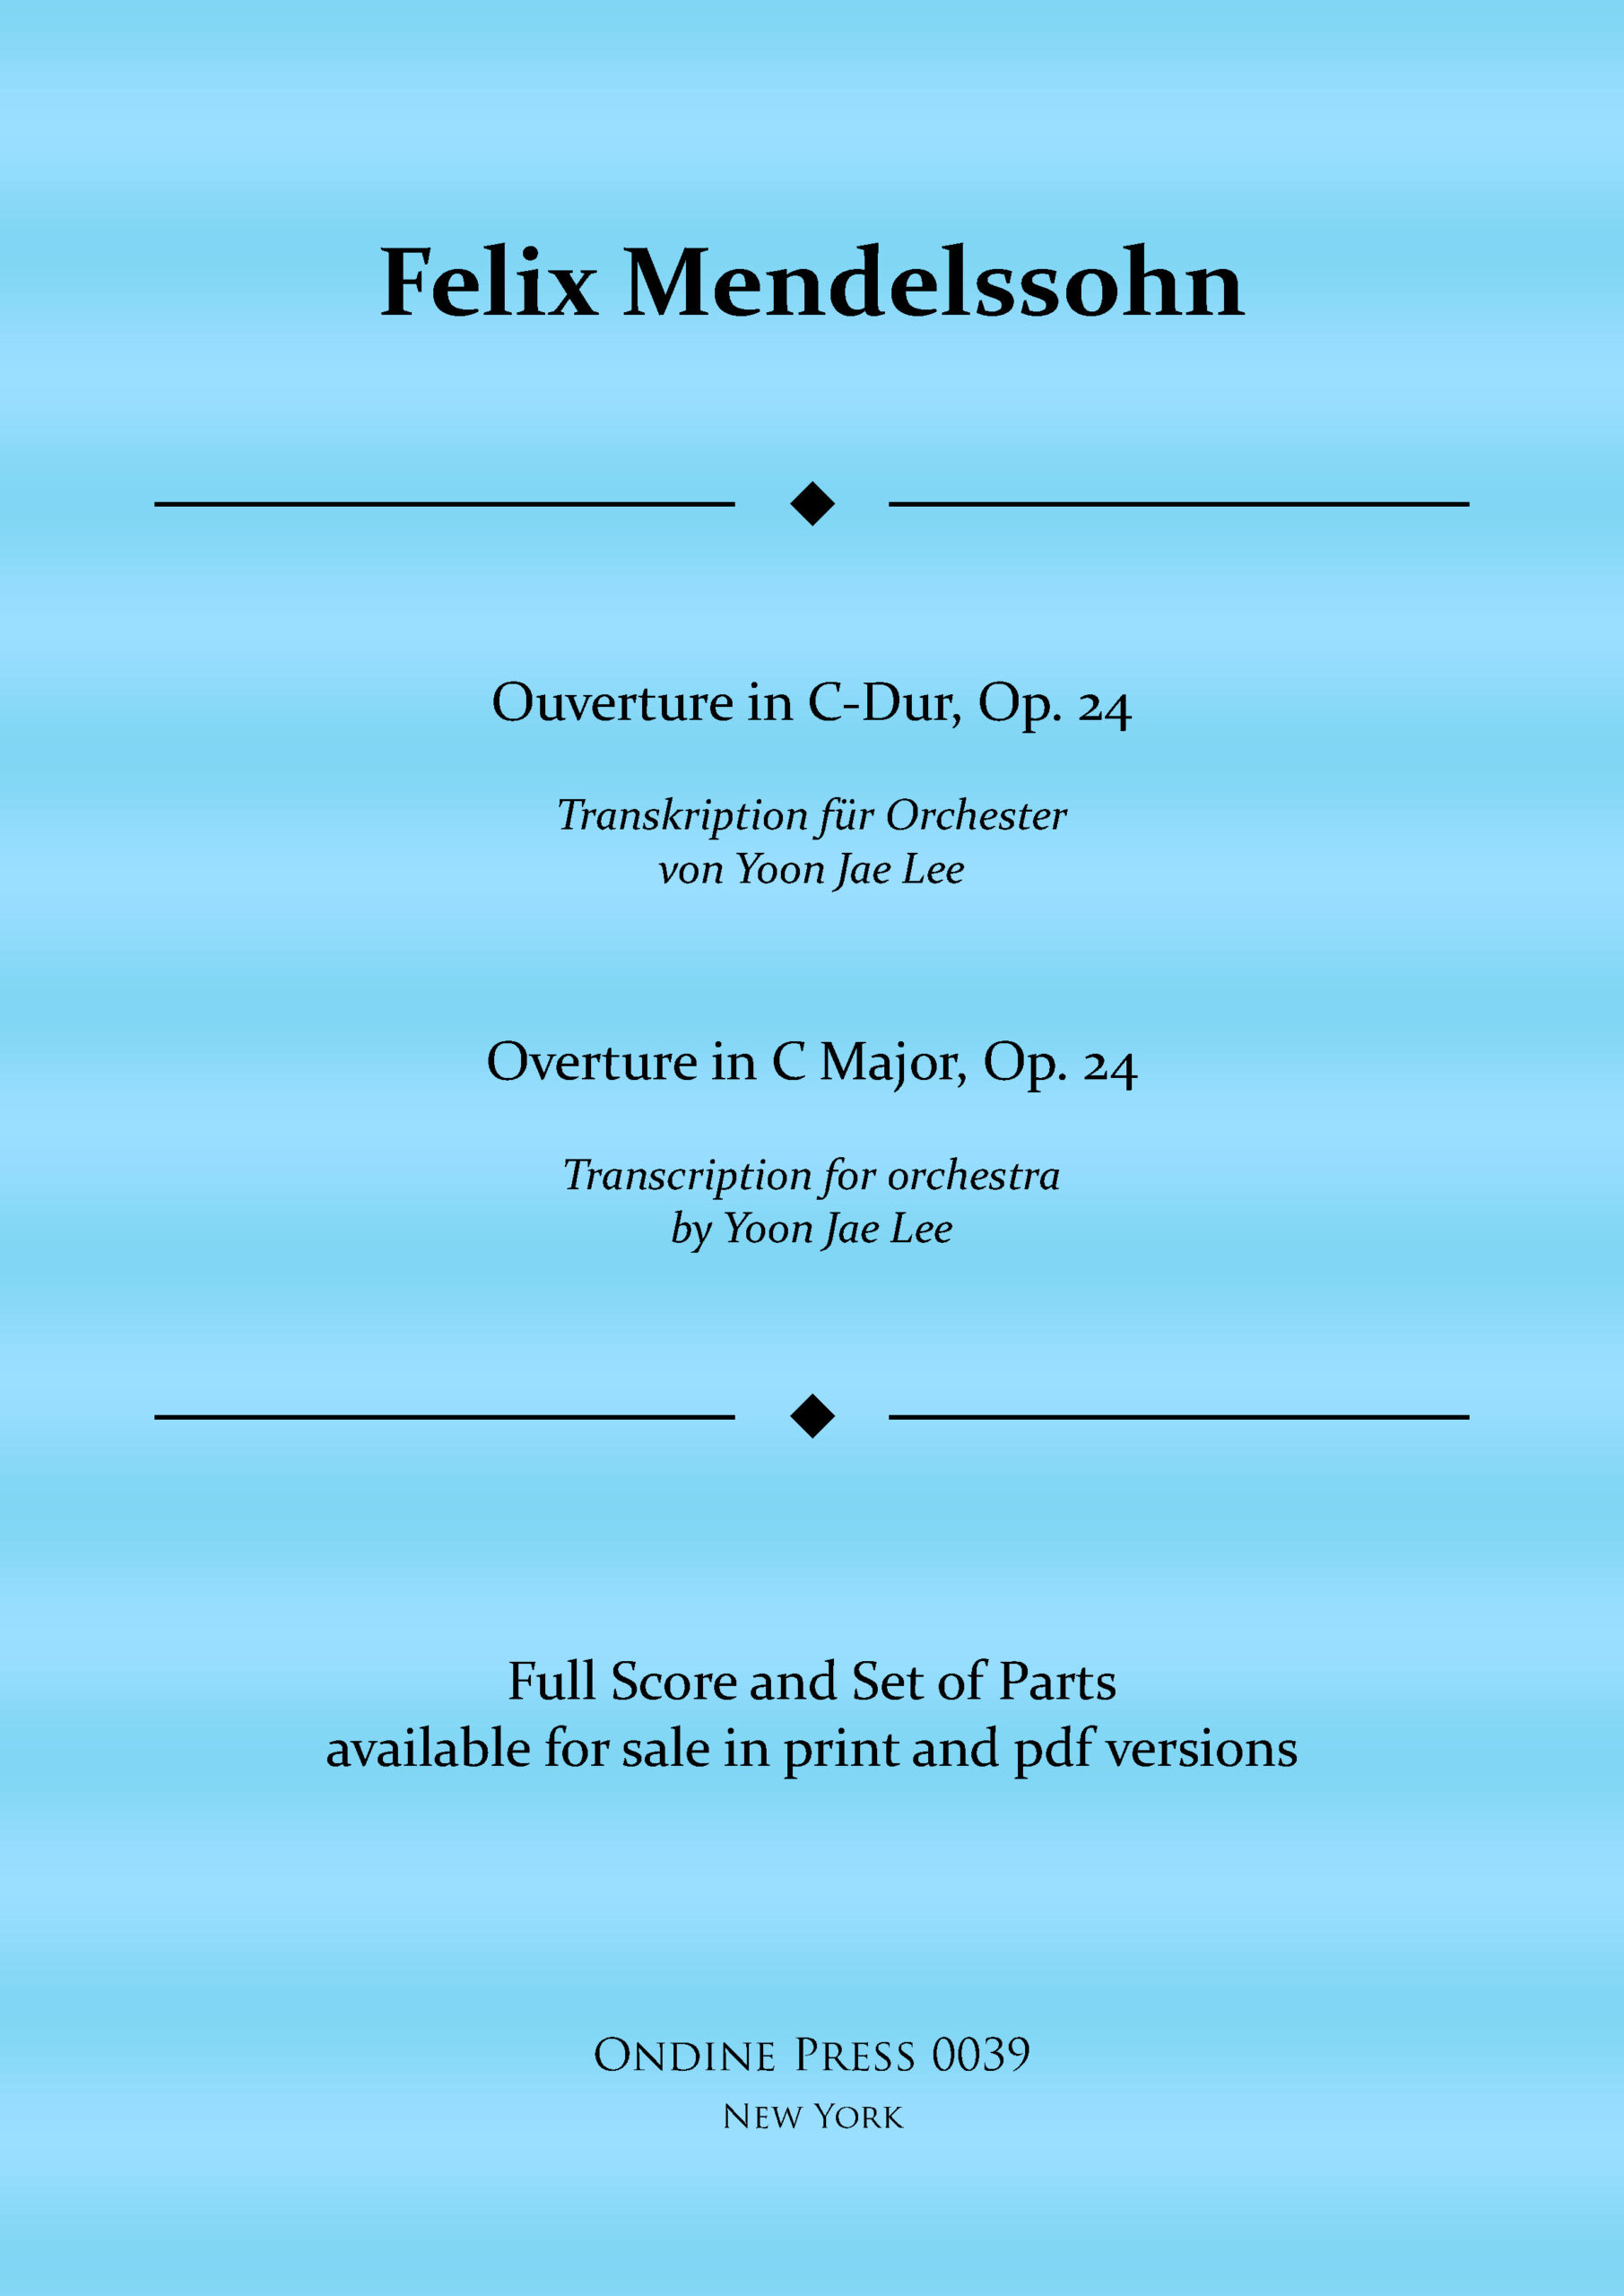 Mendelssohn Overture in C Major Op. 24 web cover scaled